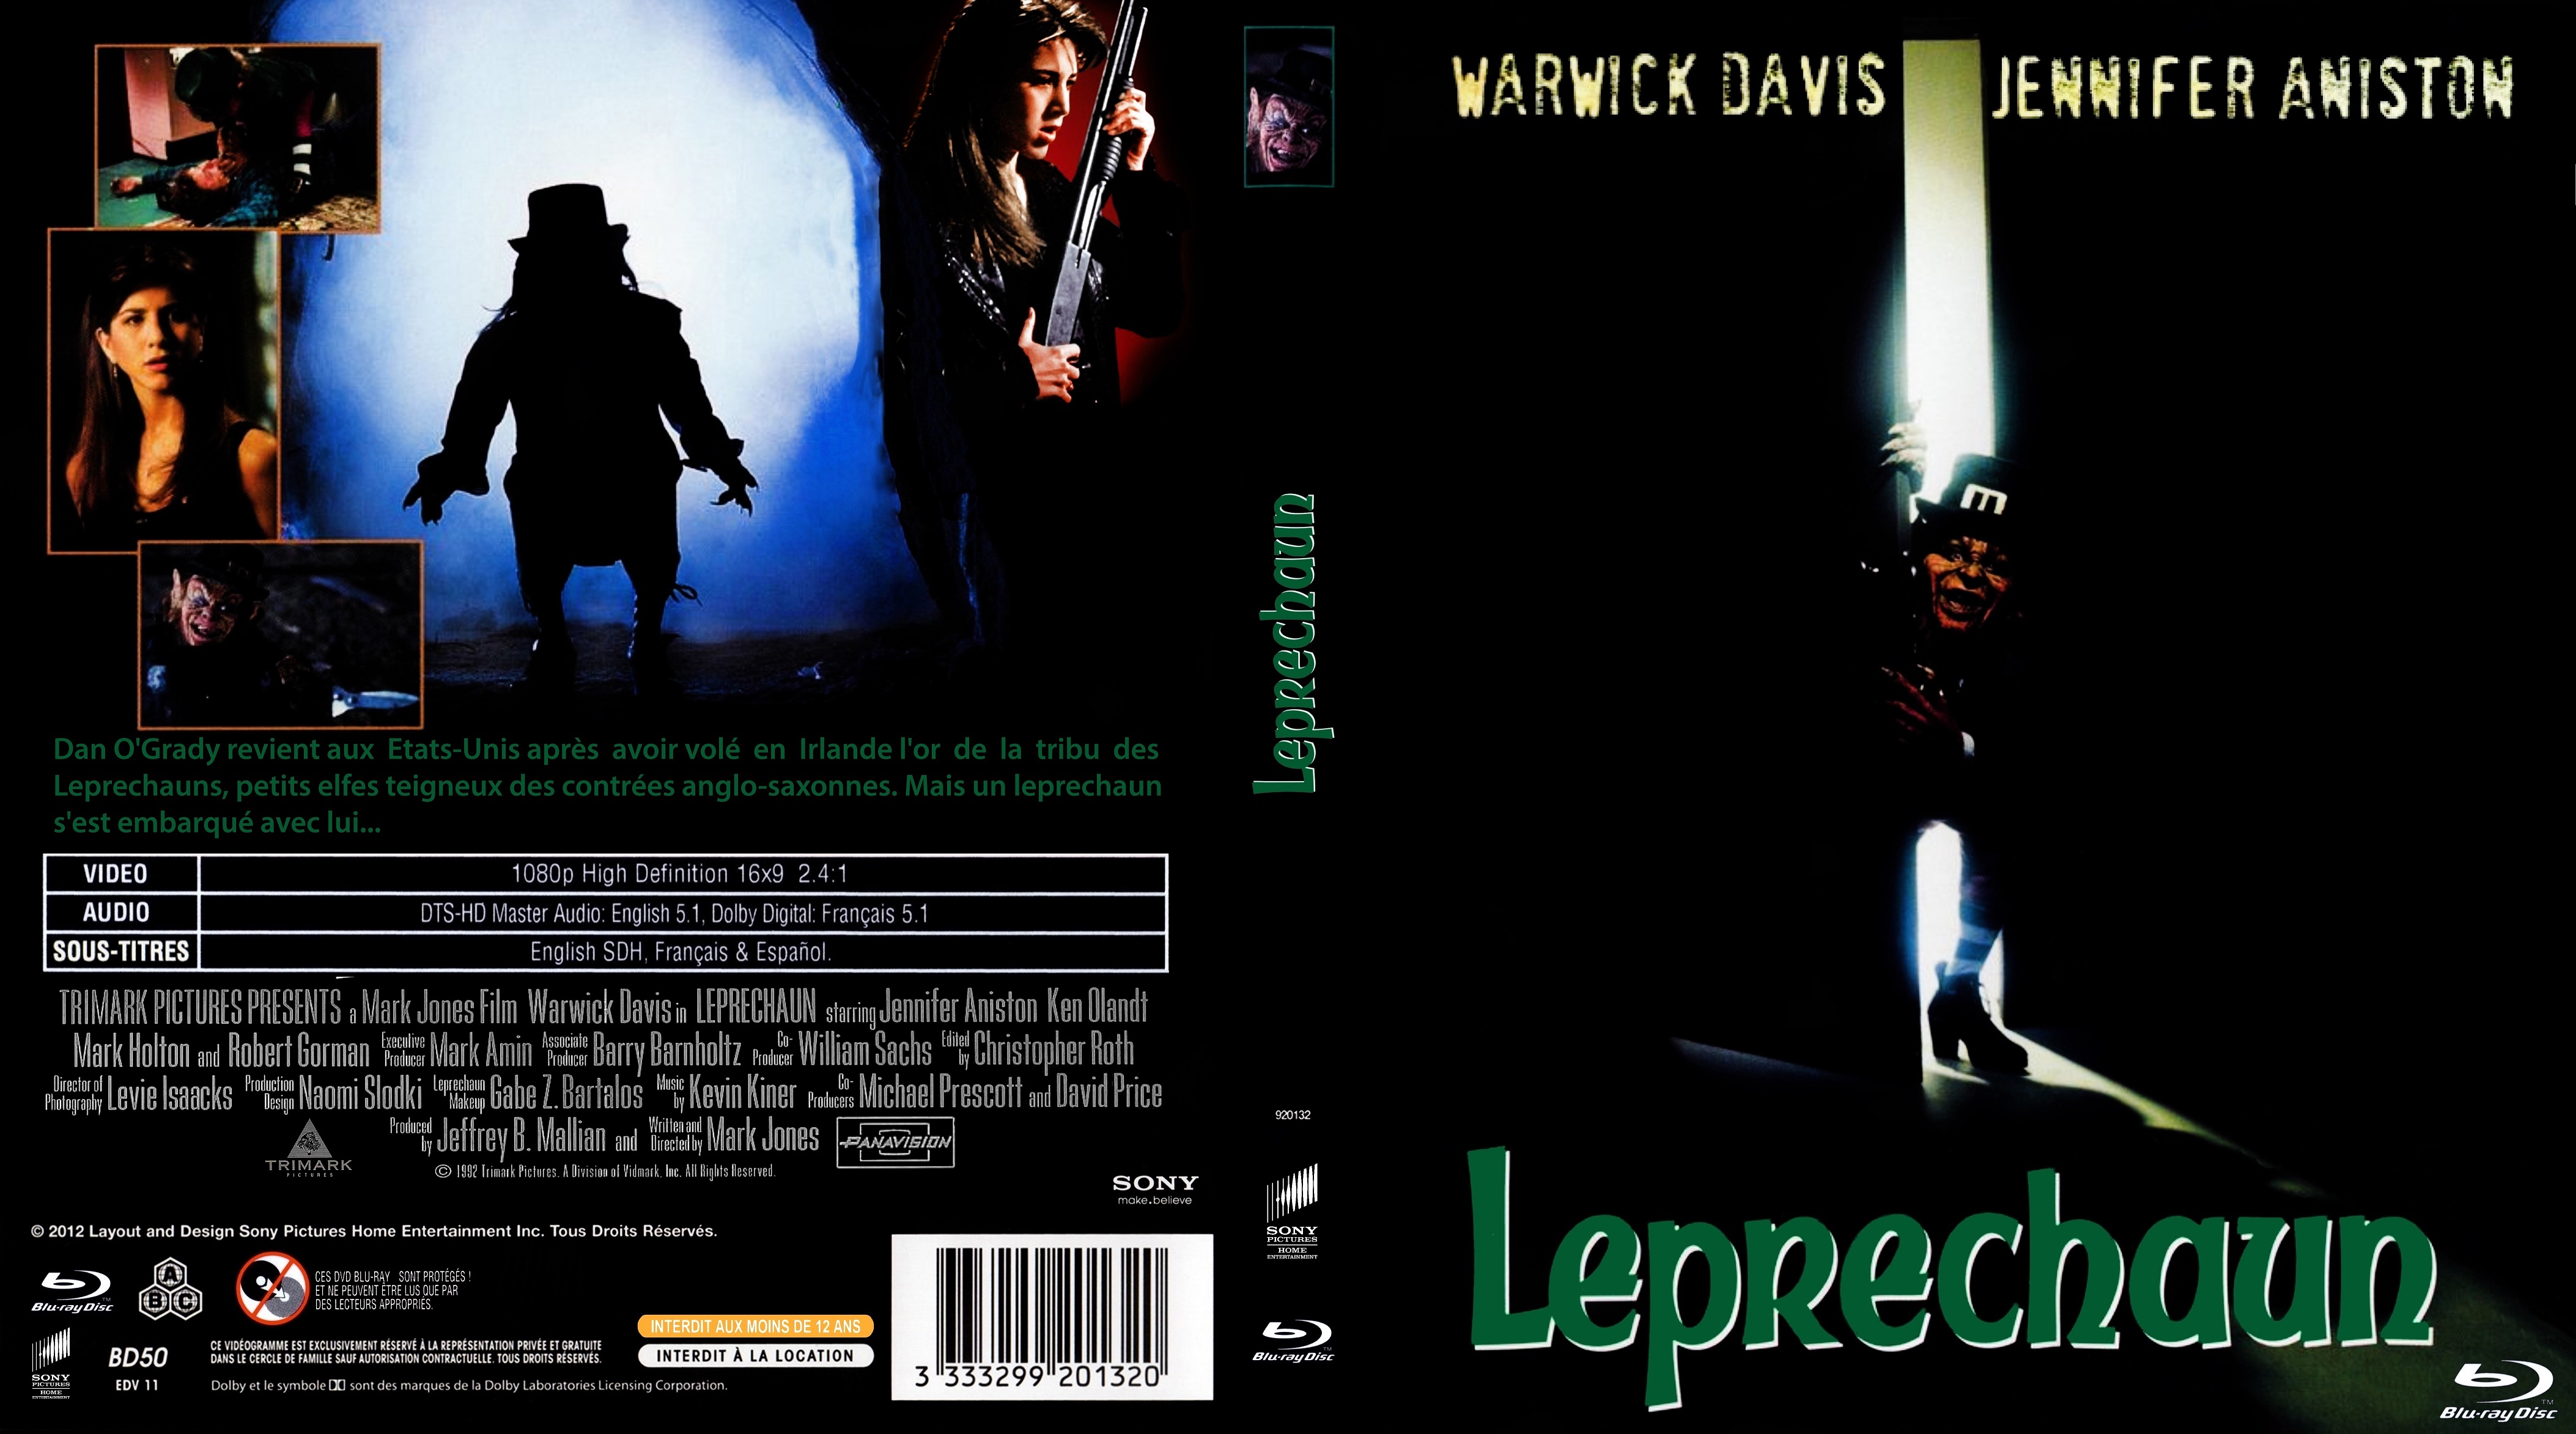 Jaquette DVD Leprechaun custom (BLU-RAY)